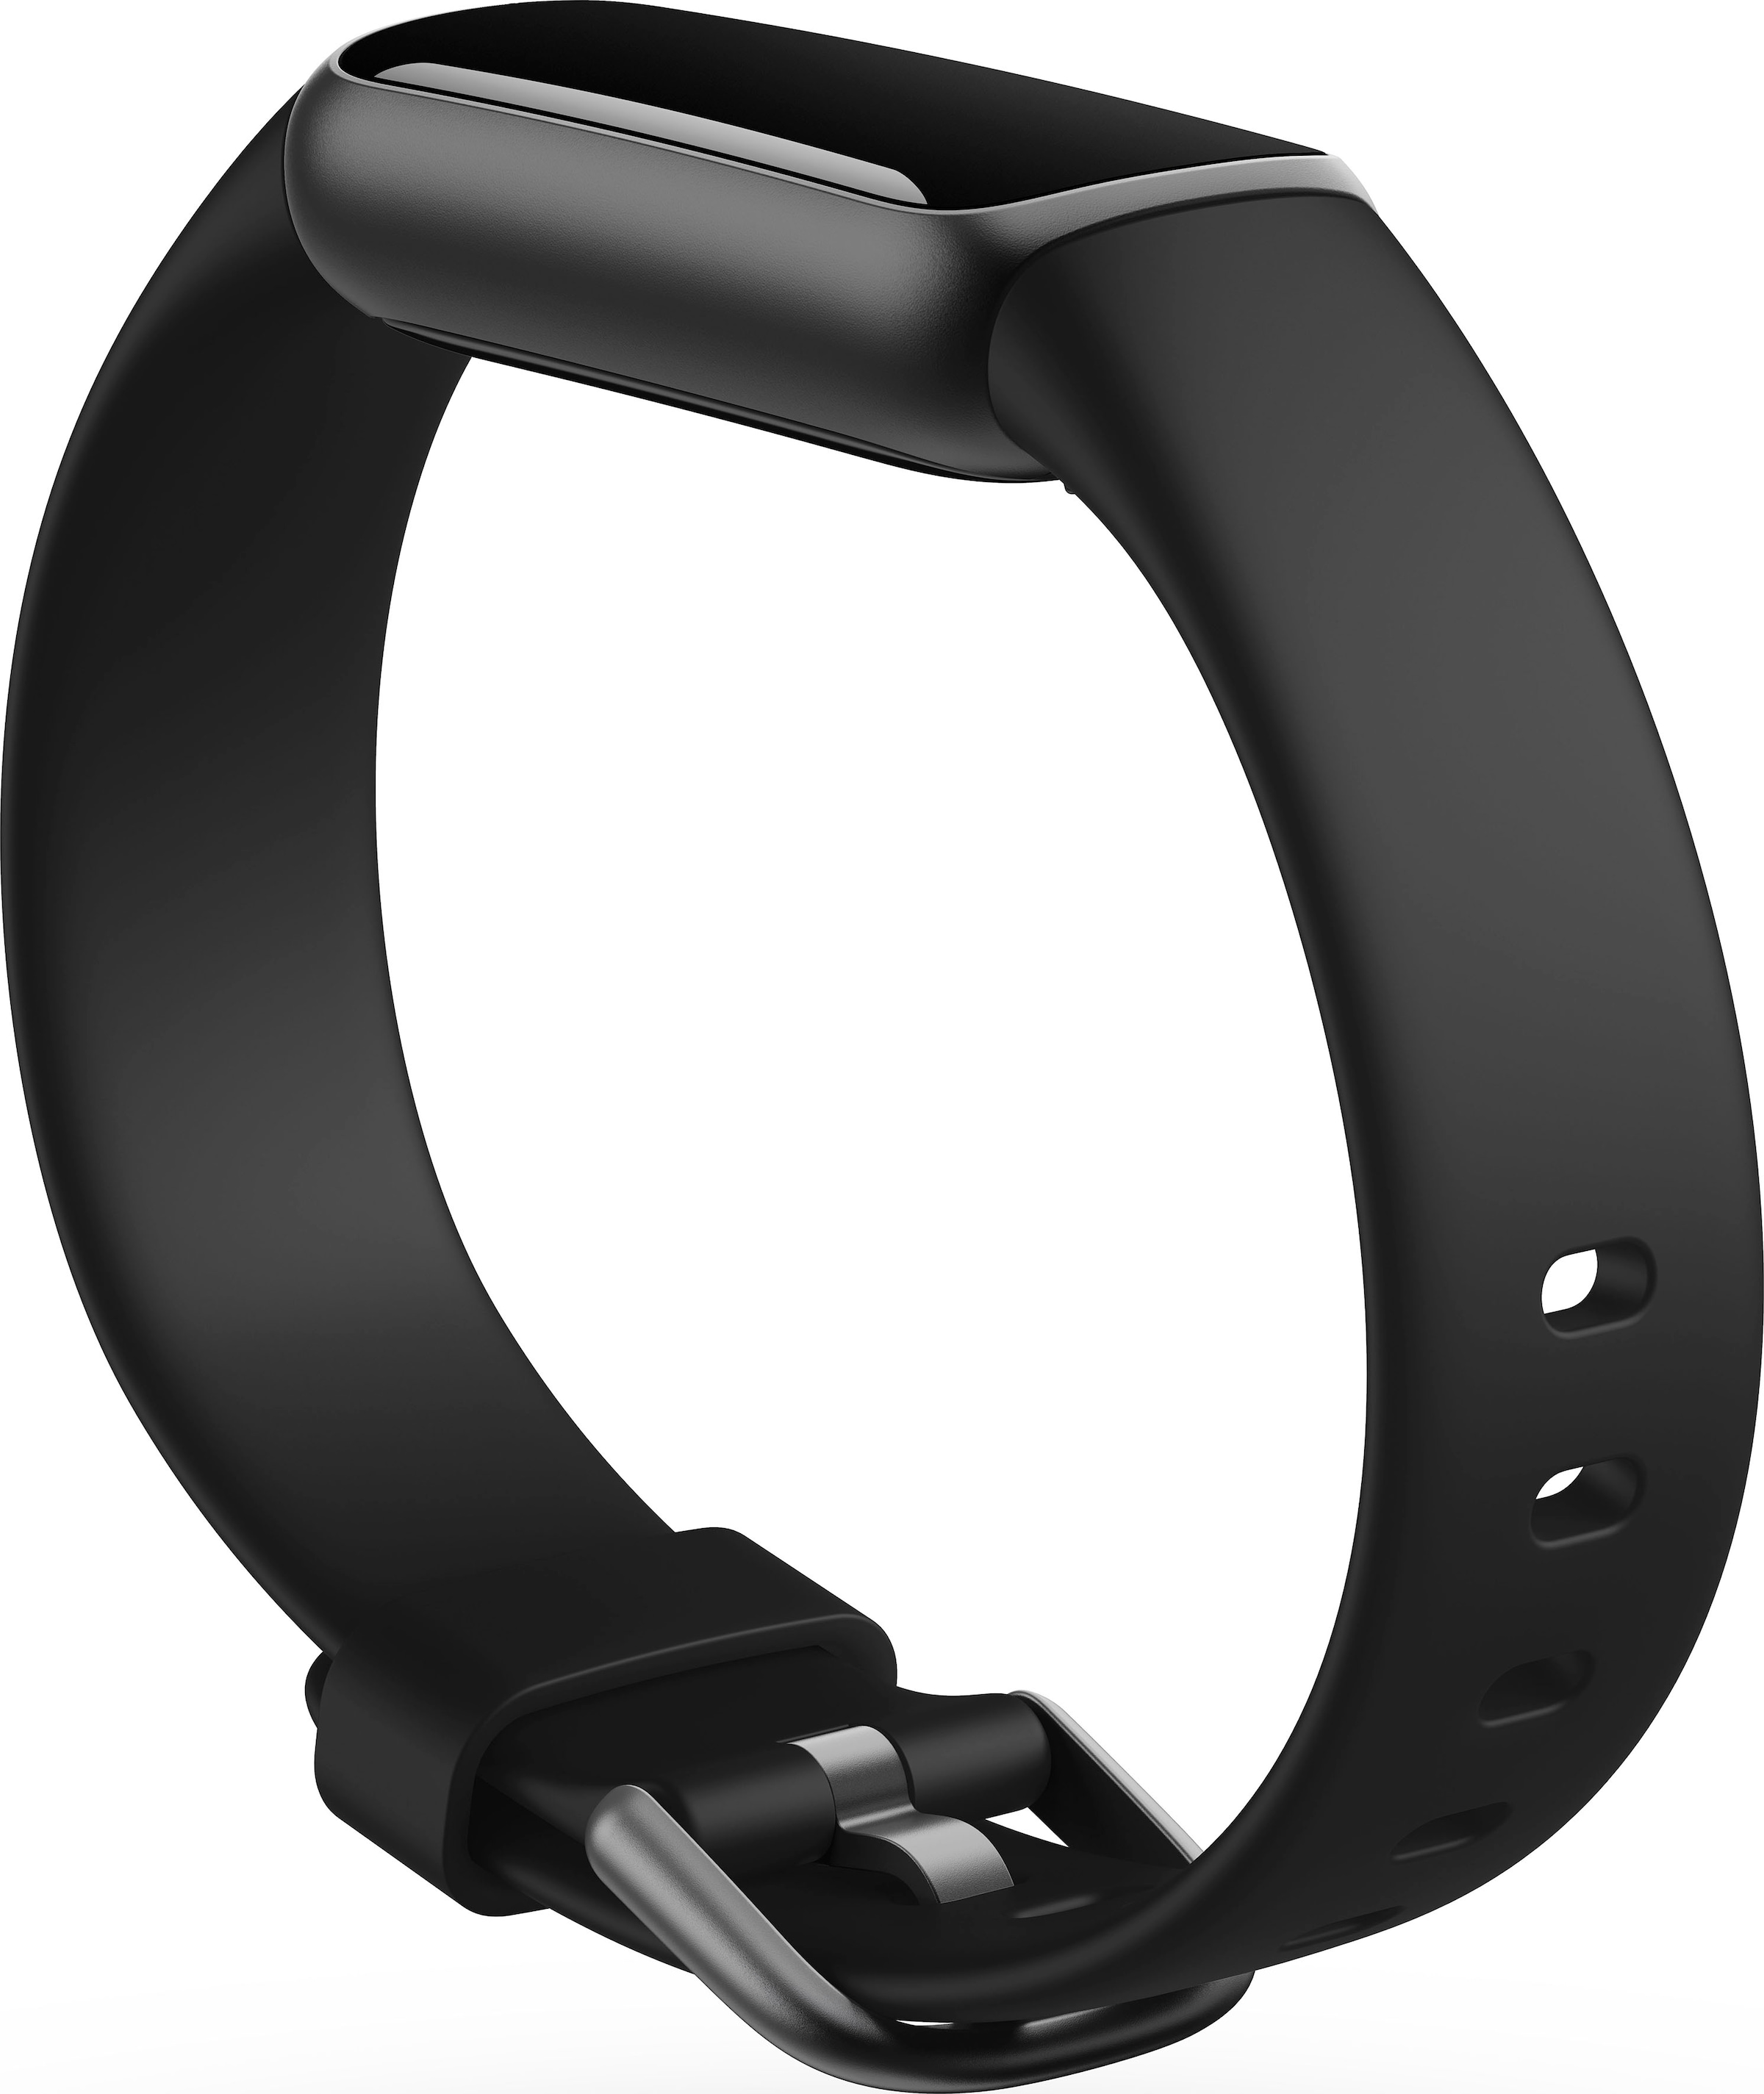 »Luxe« BAUR | Smartwatch Google fitbit by